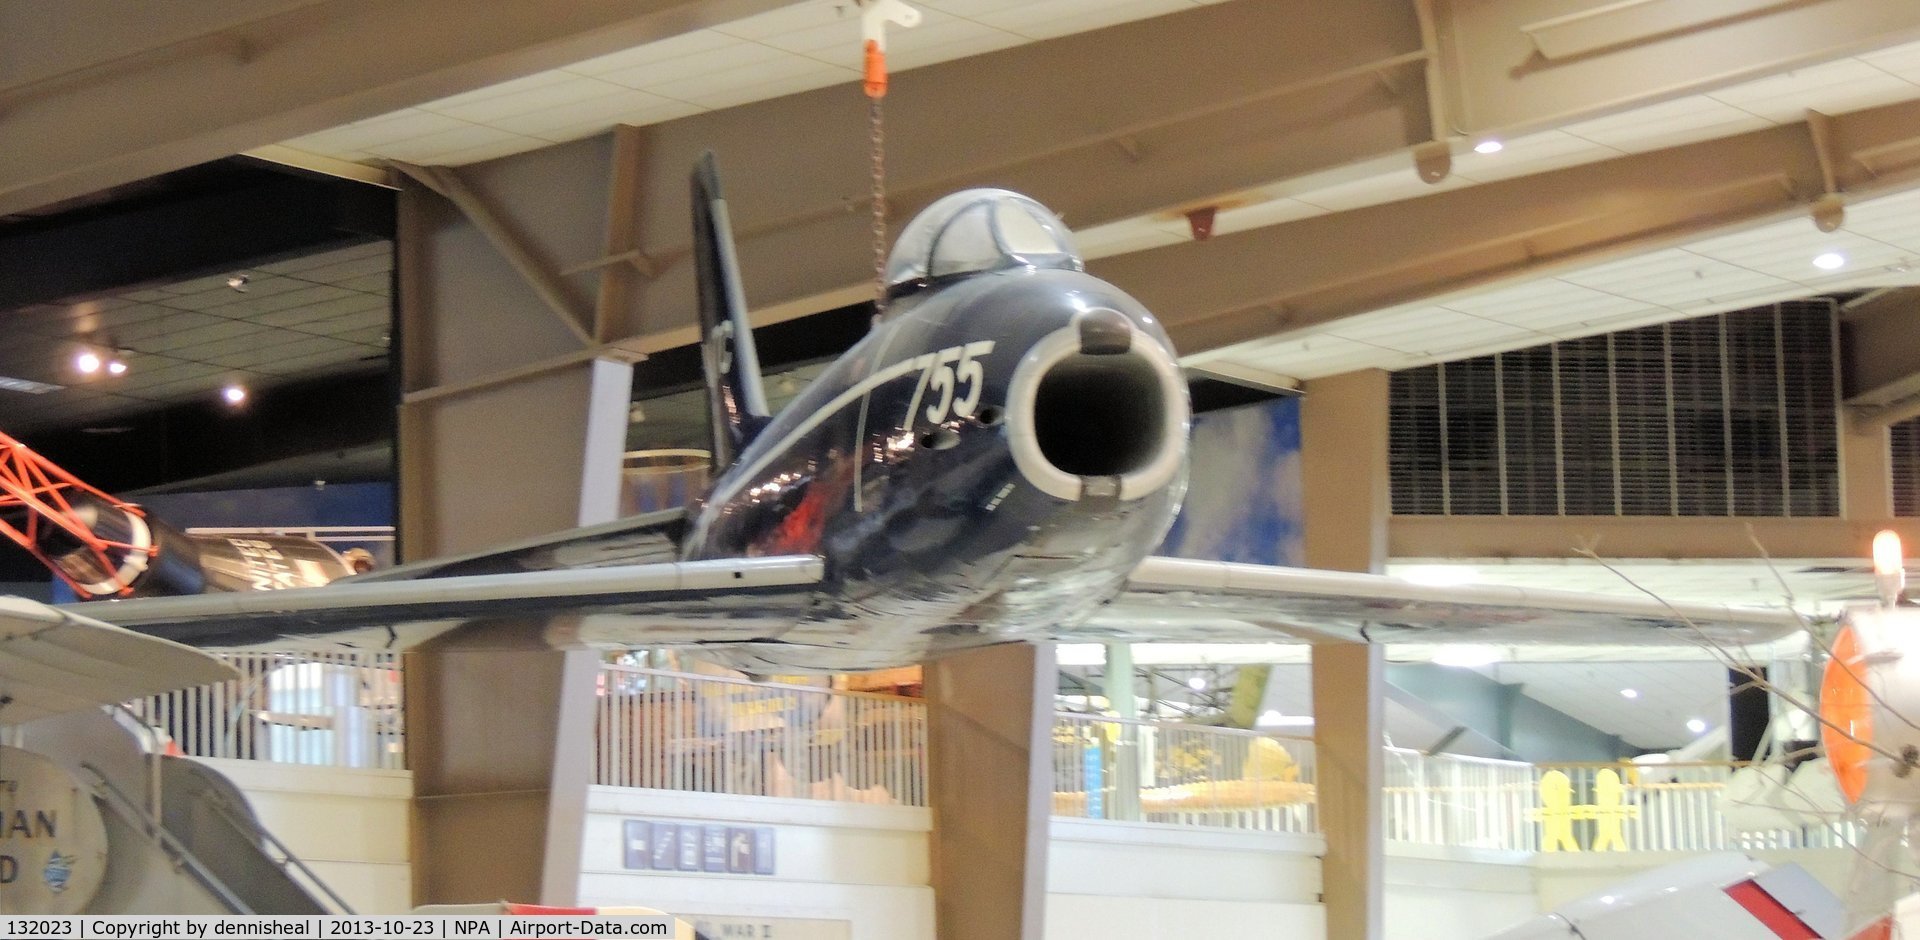 132023, North American FJ-2 Fury C/N Not found 132023, NORTH AMERICAN FJ-2 FURY AT NAVAL AVIATION MUSEUM